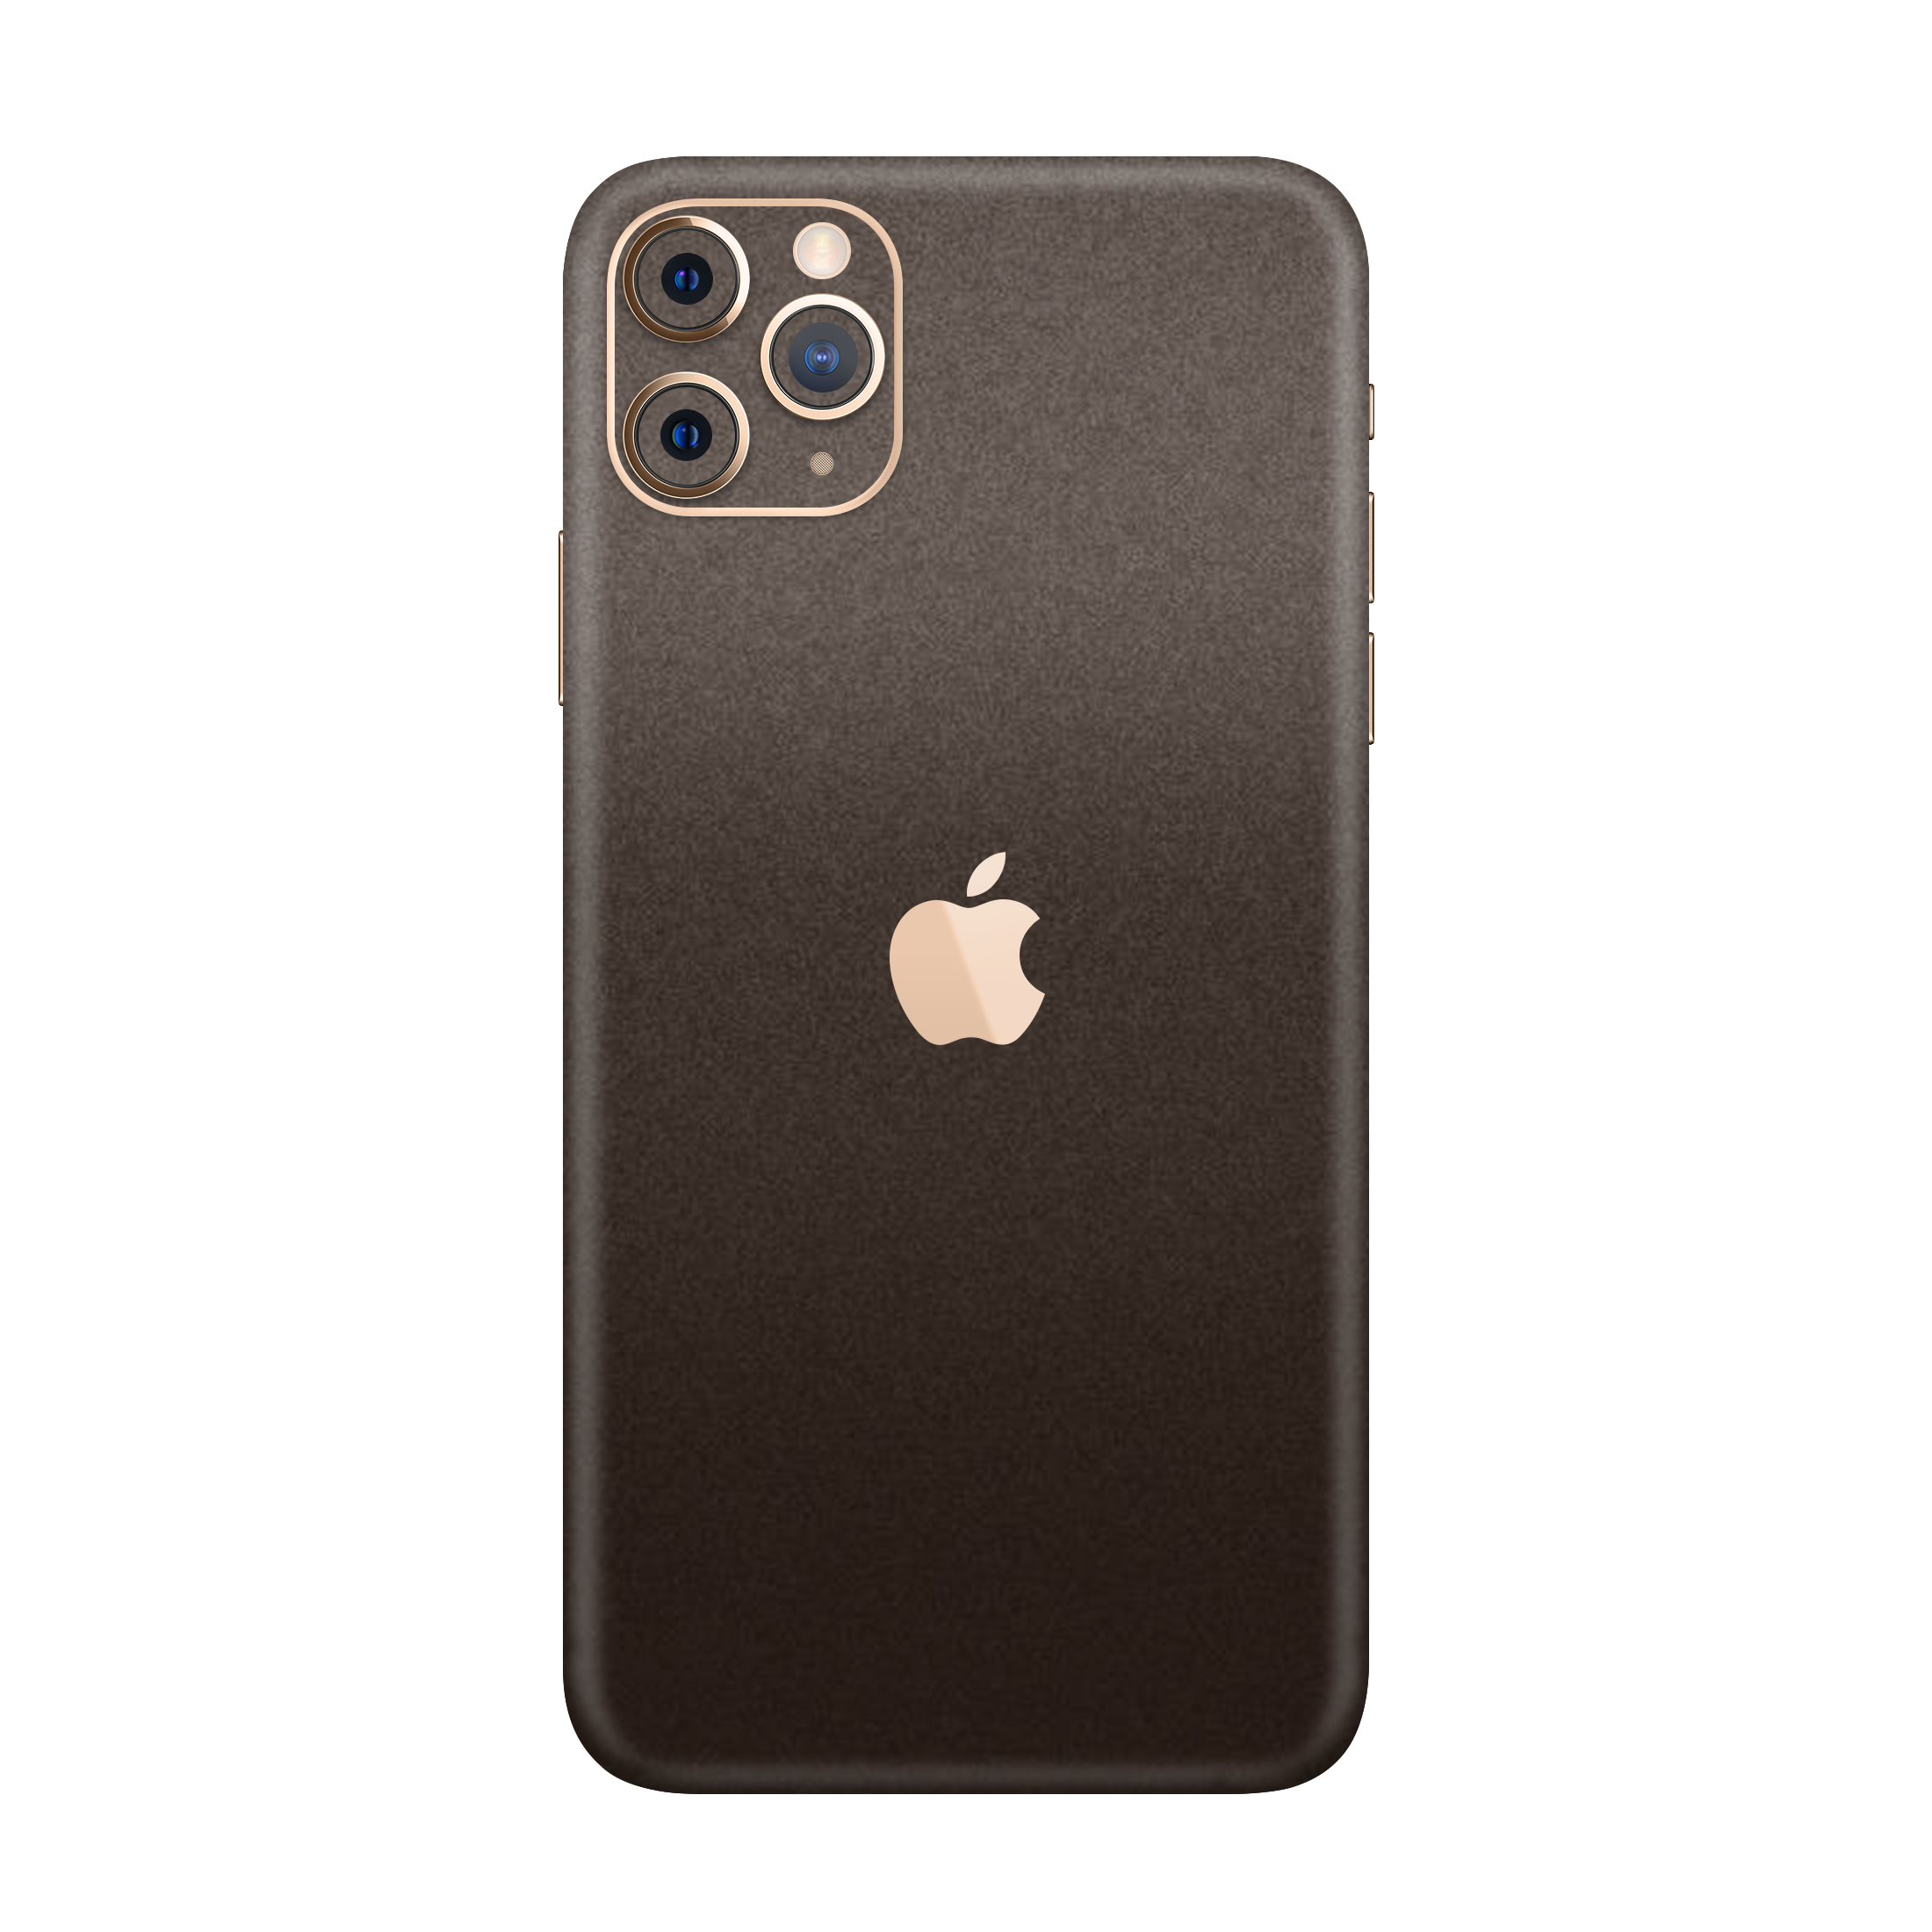 Matte Brown Metallic Skin For iPhone 11 Pro Max